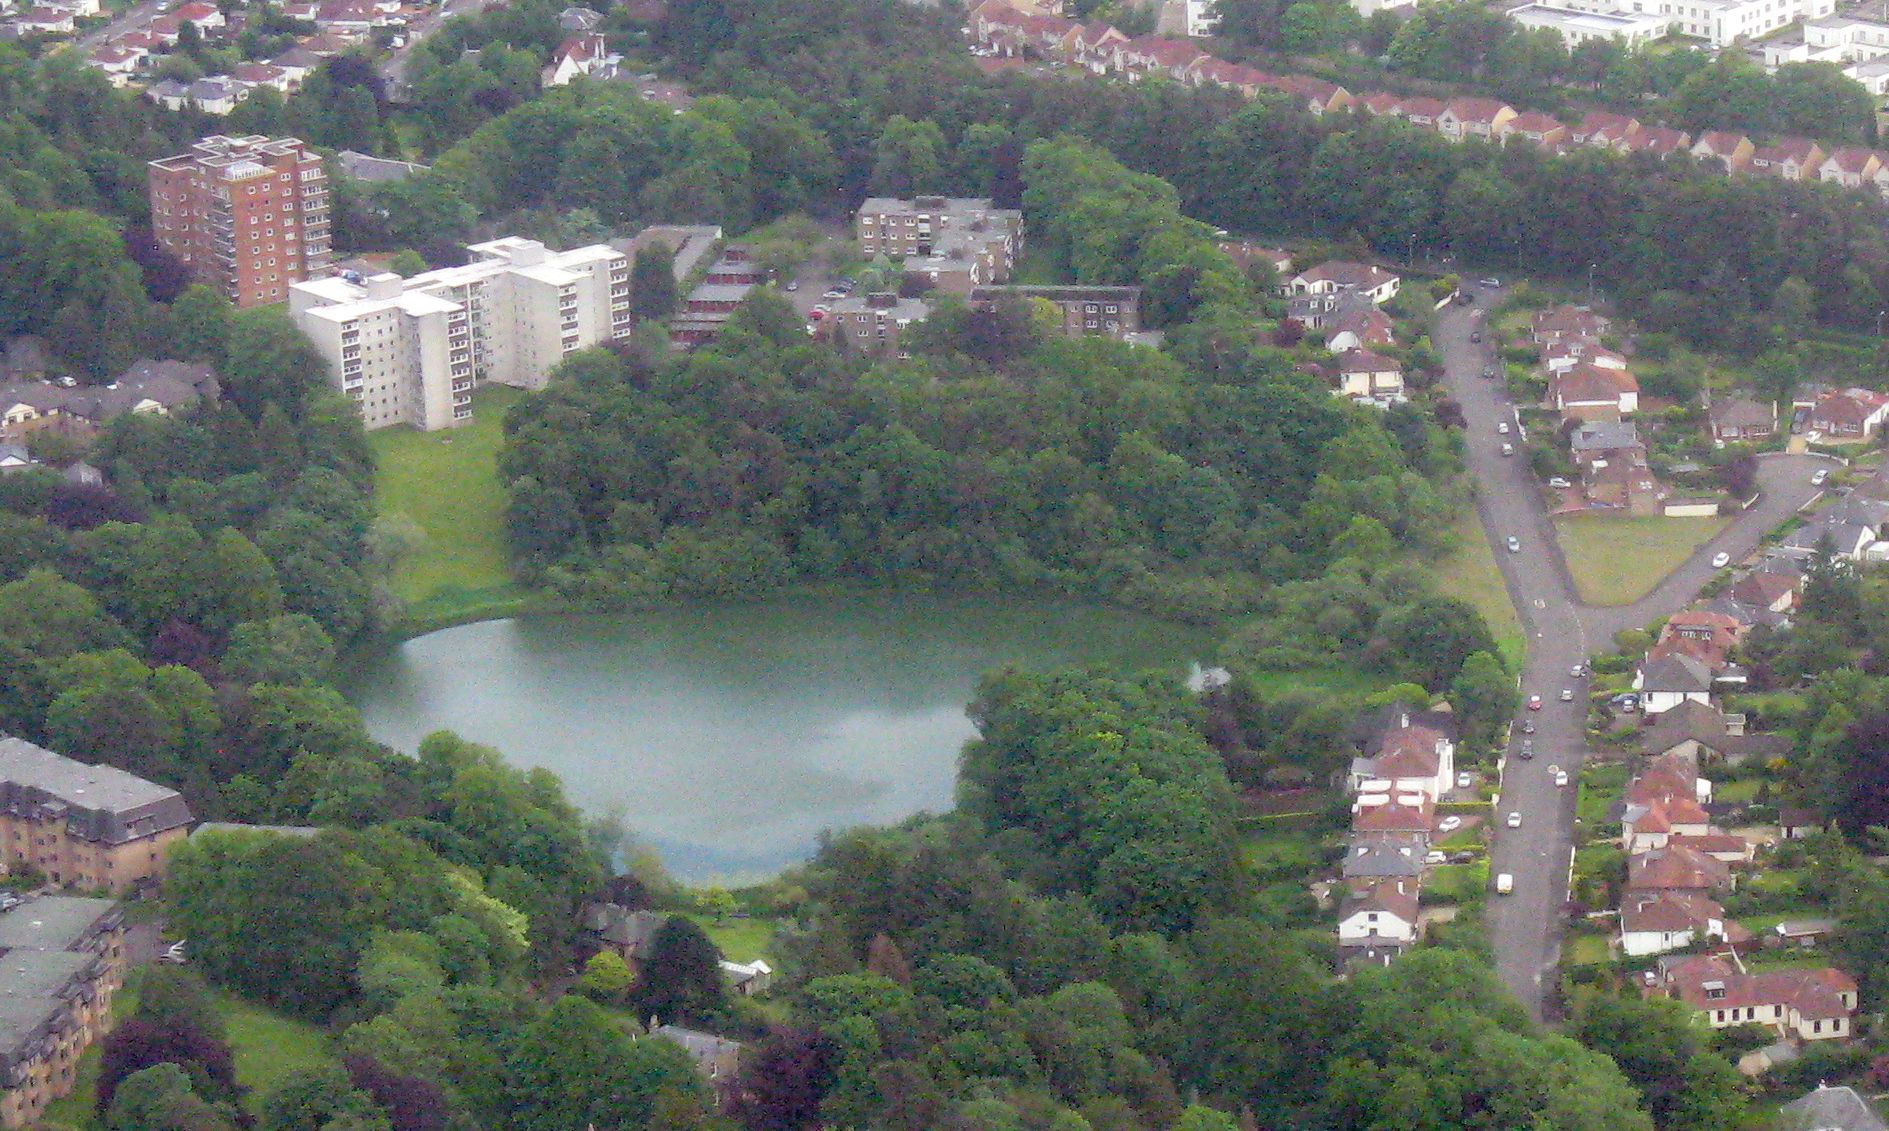 Aerial view of St.Germain's Loch in Bearsden